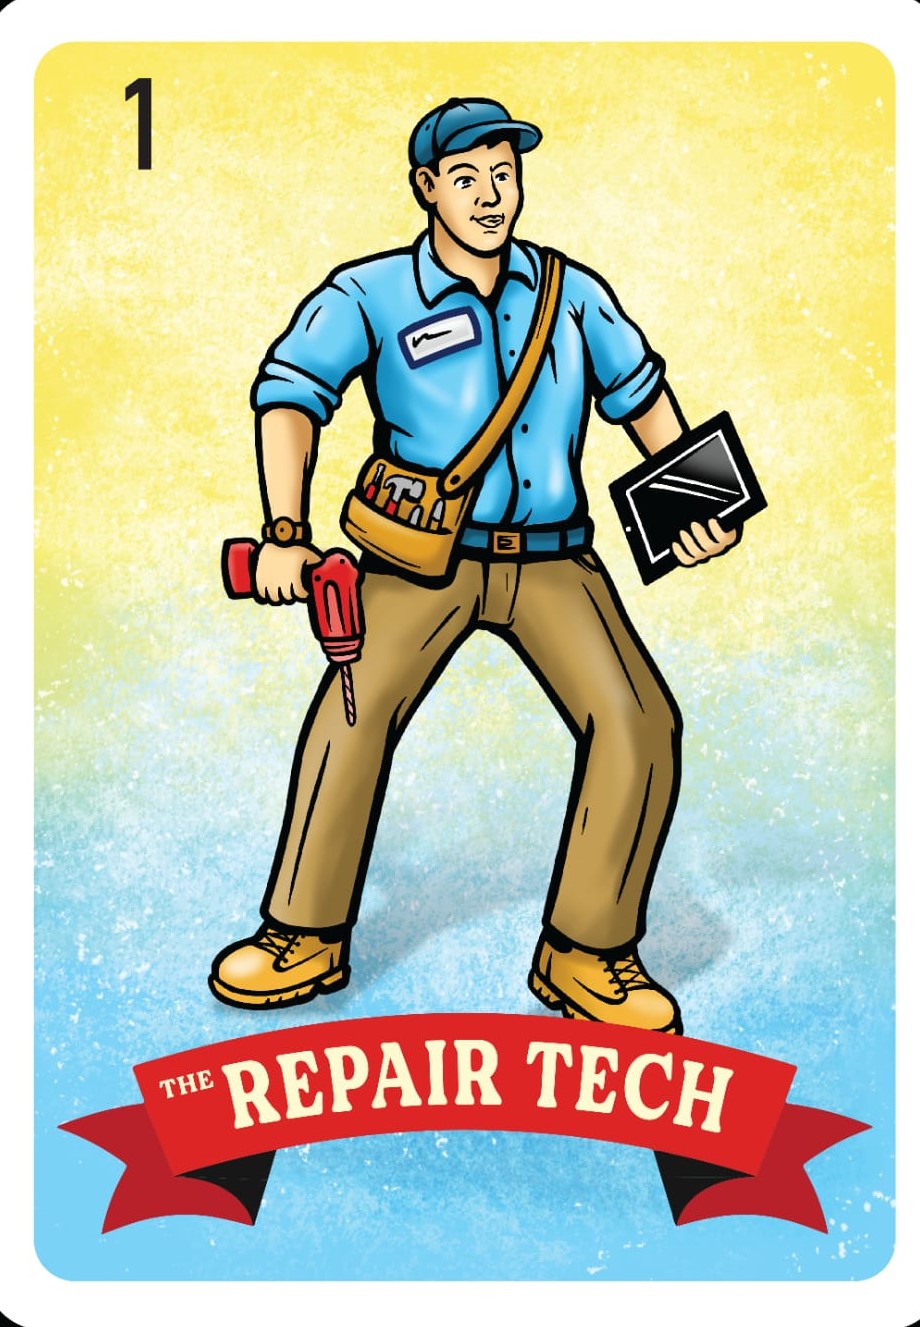 The Repair Tech LLC